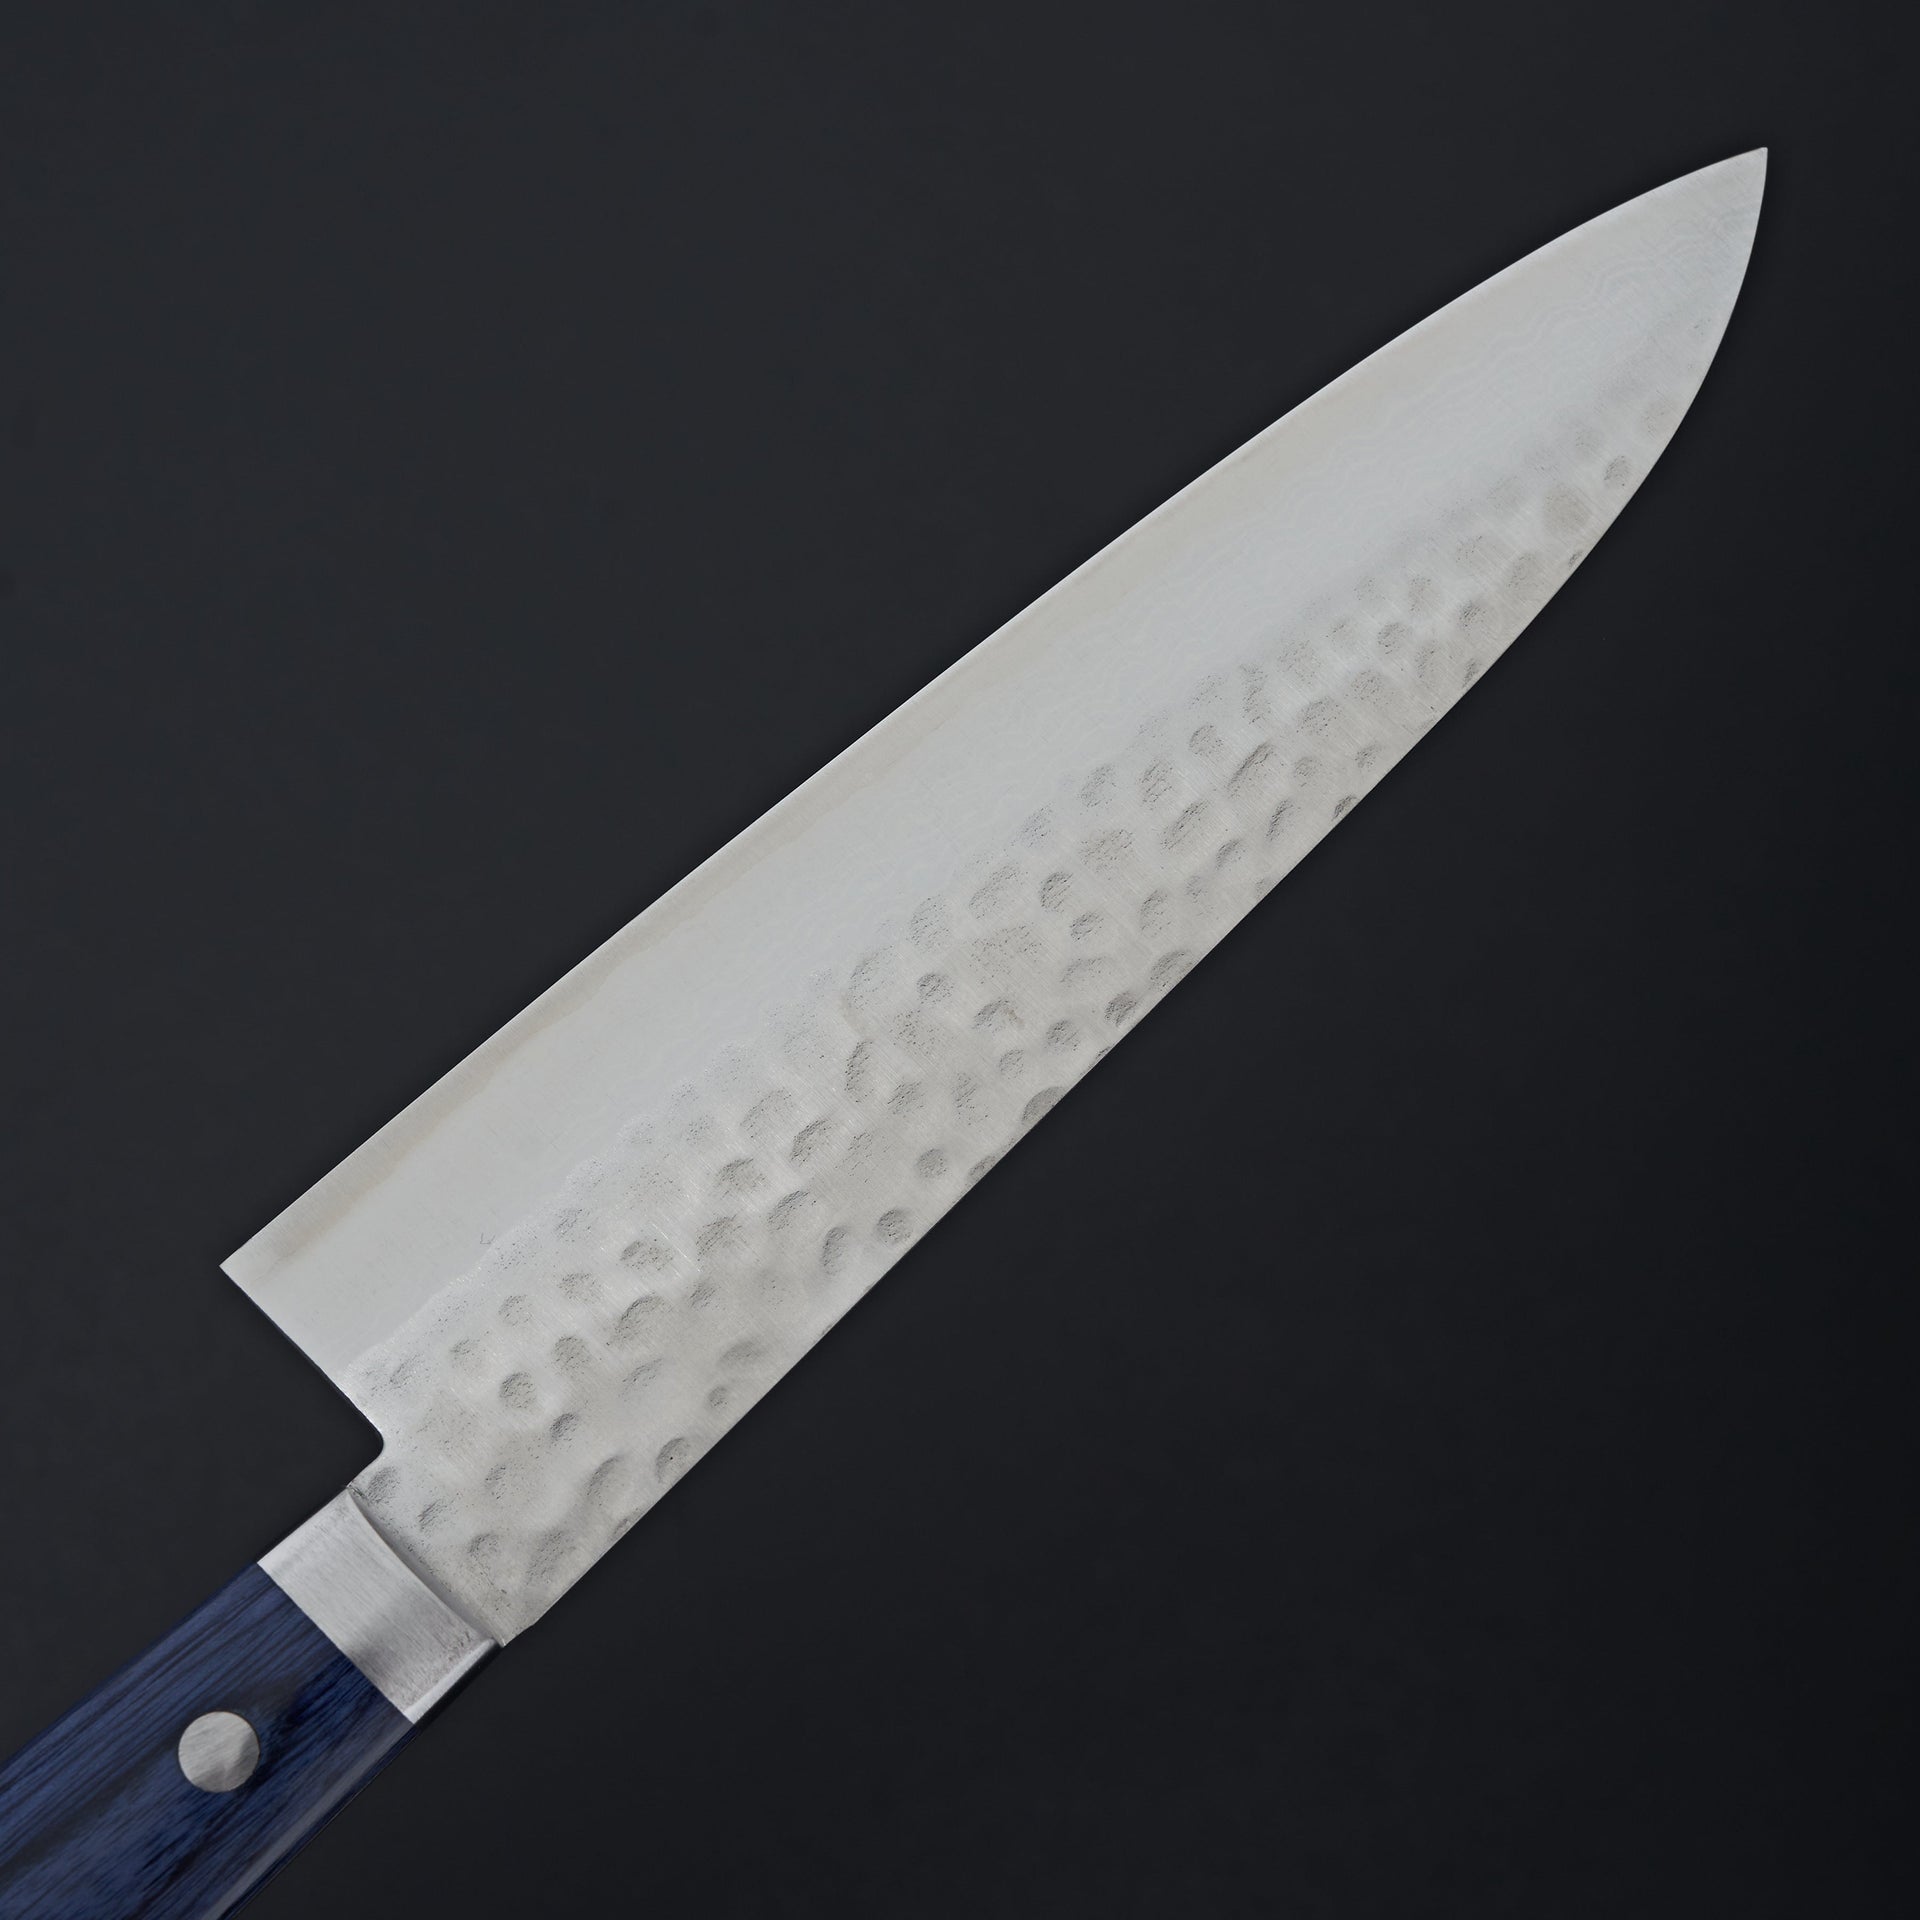 Masutani Kokuryu Gyuto 180mm-Knife-Masutani-Carbon Knife Co